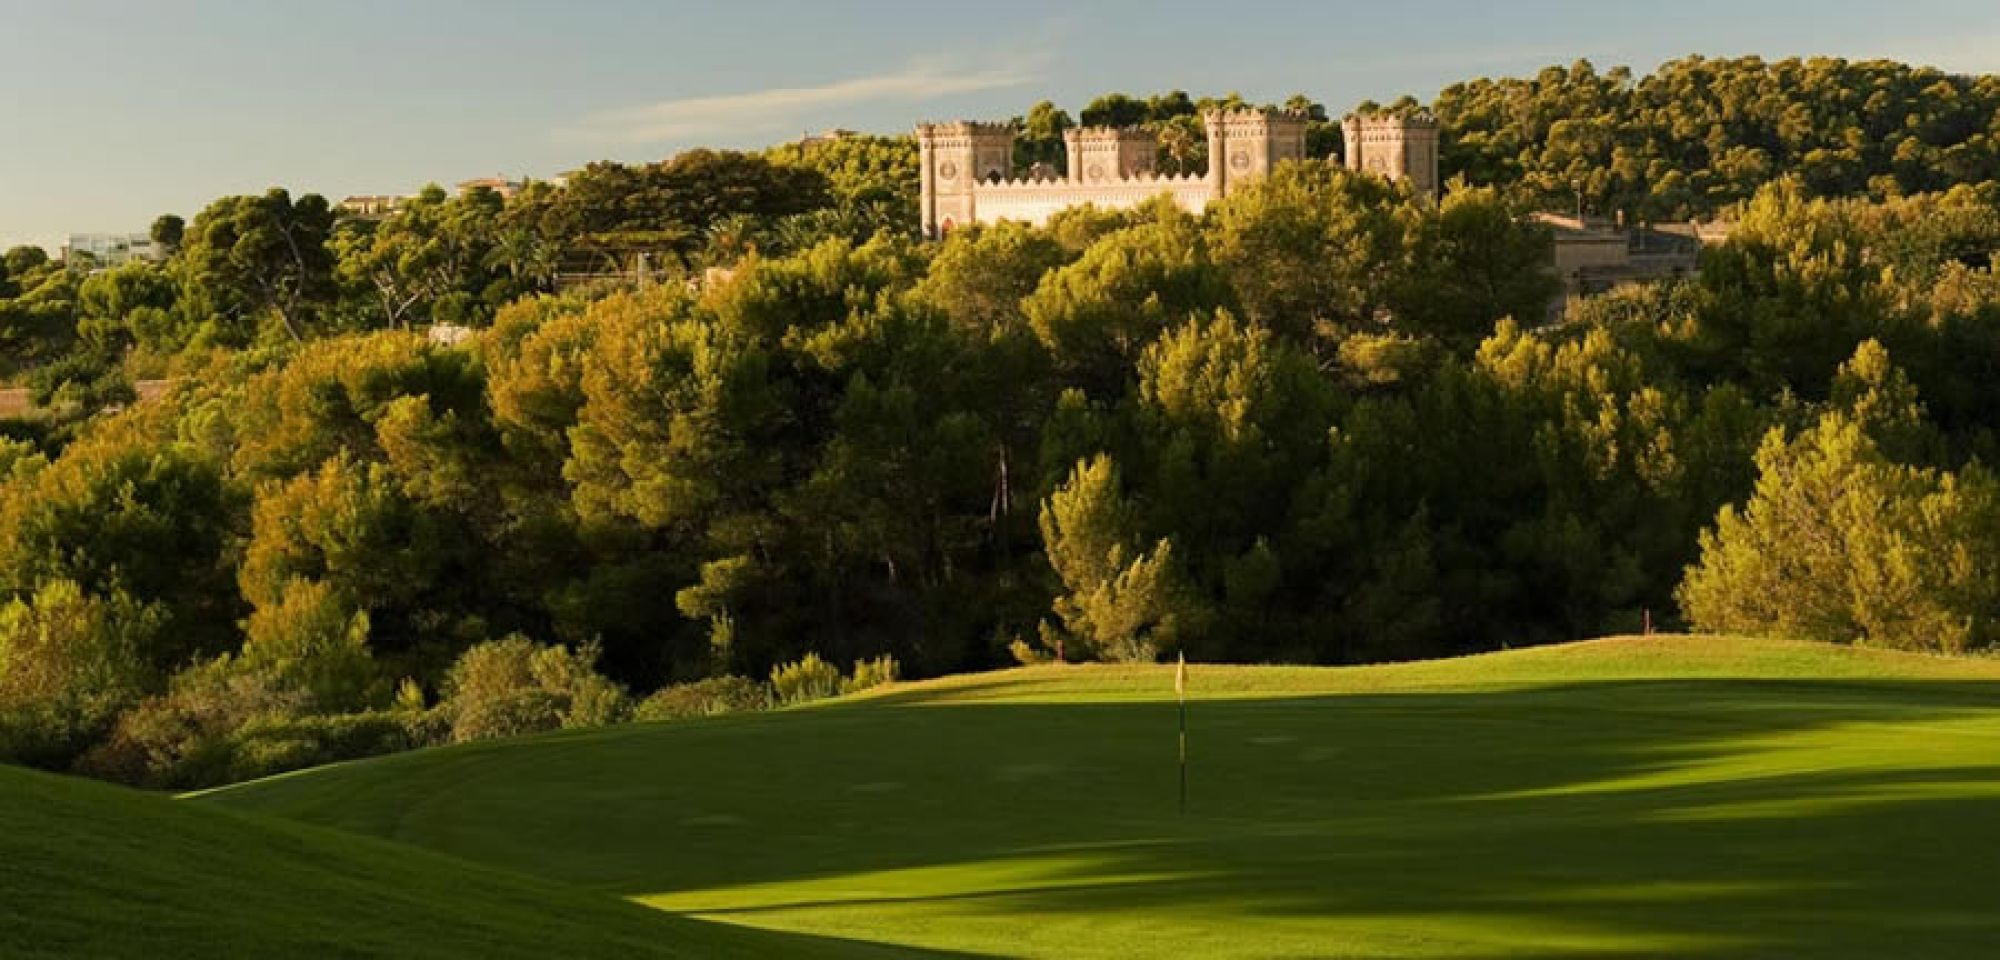 Real Golf de Bendinat consists of lots of the most excellent golf course near Mallorca